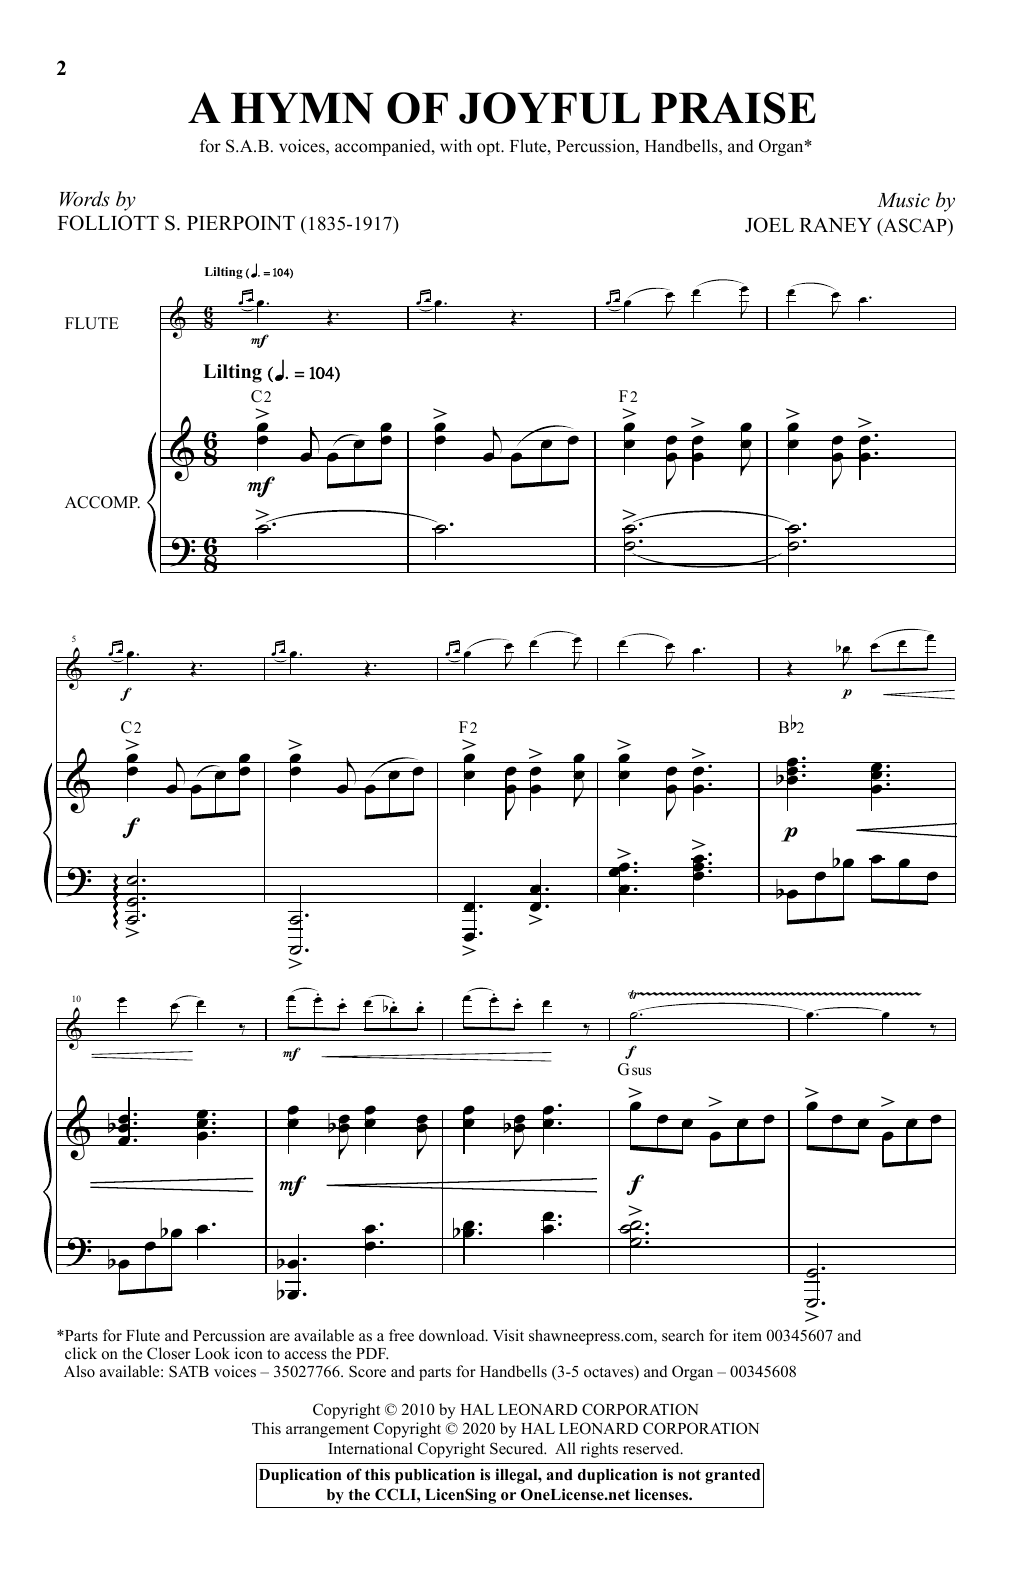 Folliott Pierpoint and Joel Raney A Hymn Of Joyful Praise Sheet Music Notes & Chords for SAB Choir - Download or Print PDF